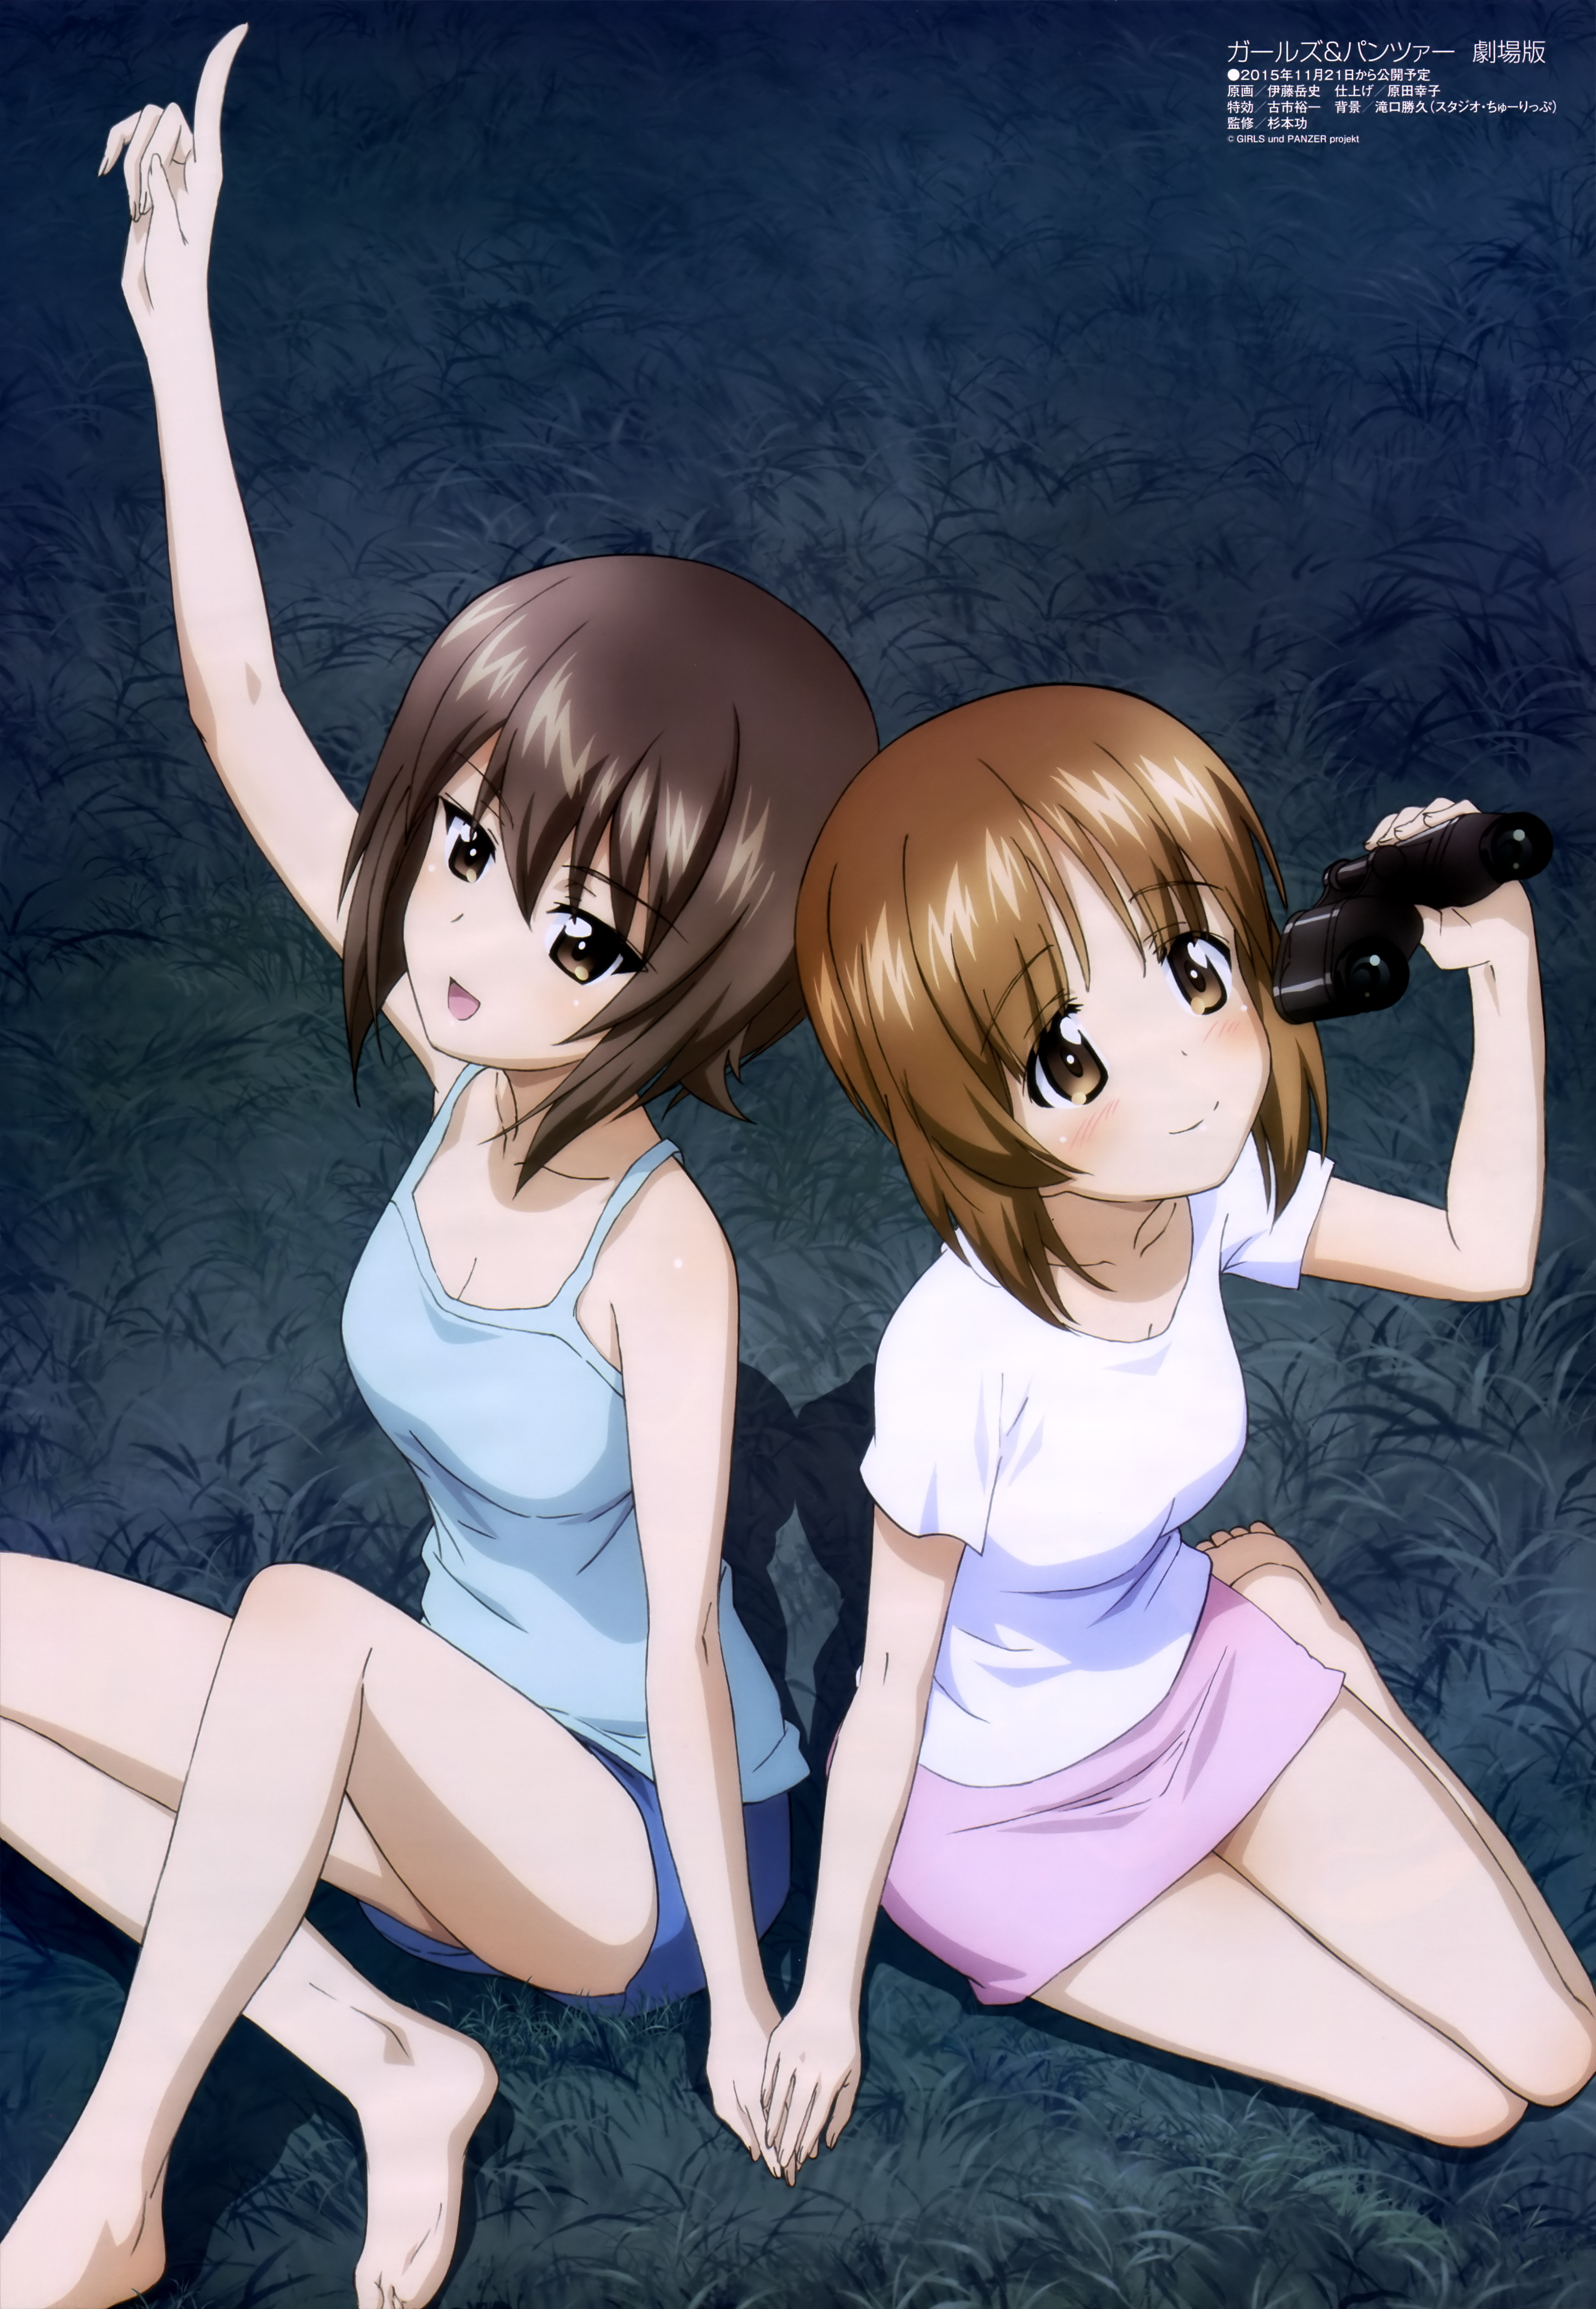 Megami MAGAZINE June 2015 anime posters Girls und Panzer